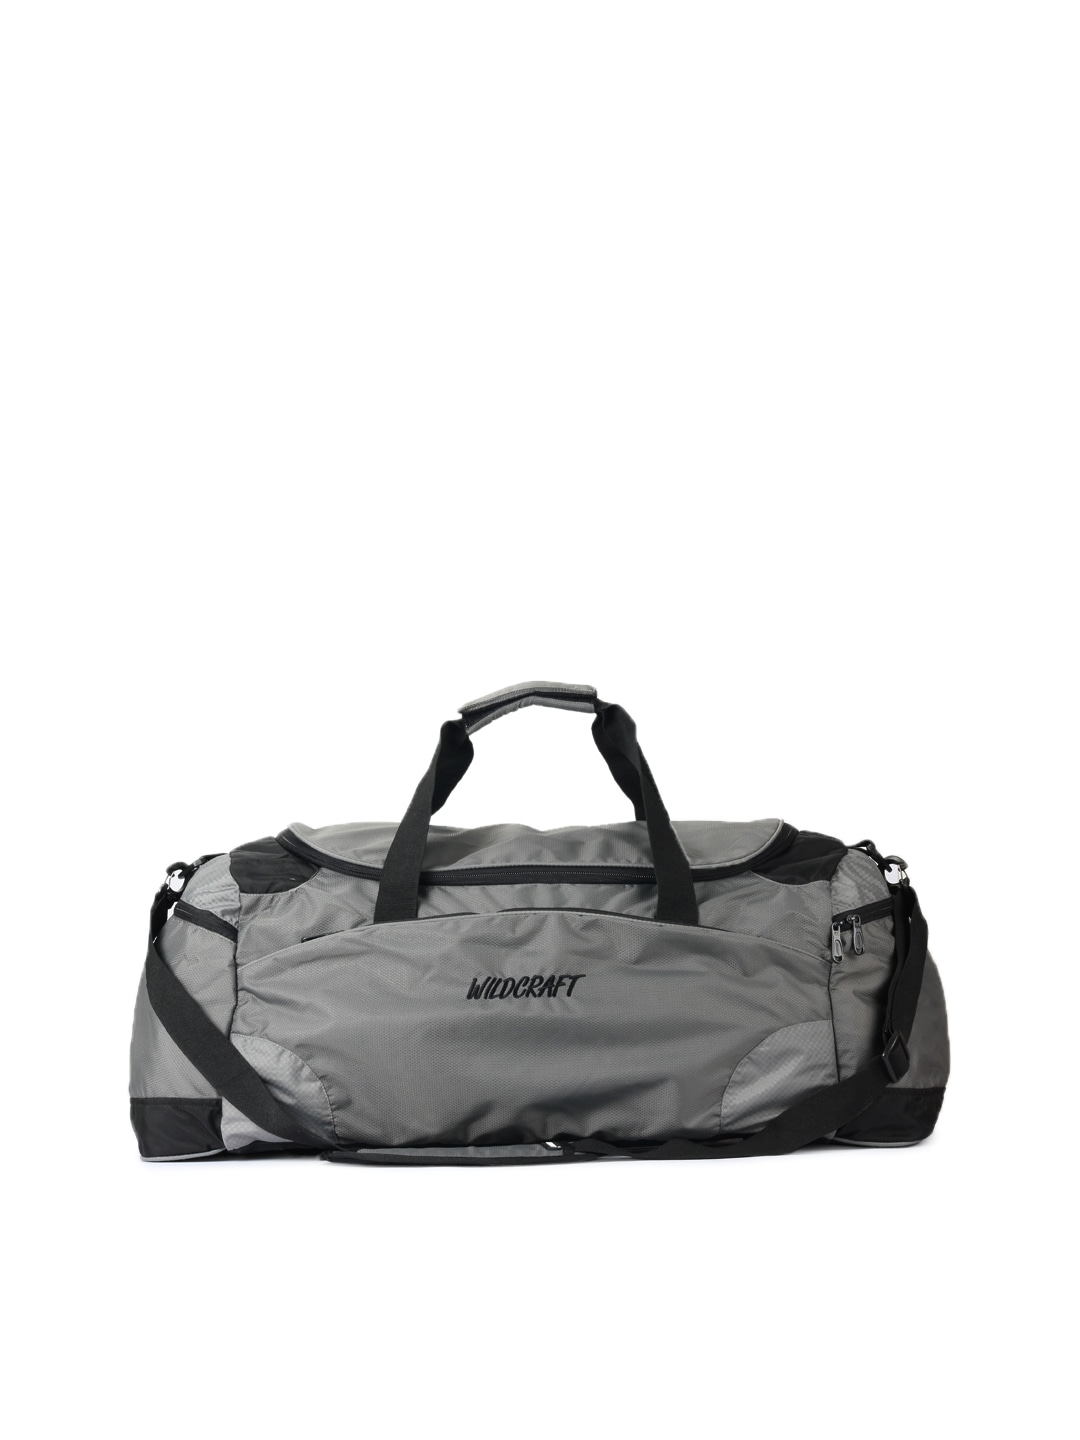 Wildcraft Unisex Grey Duffle Bag